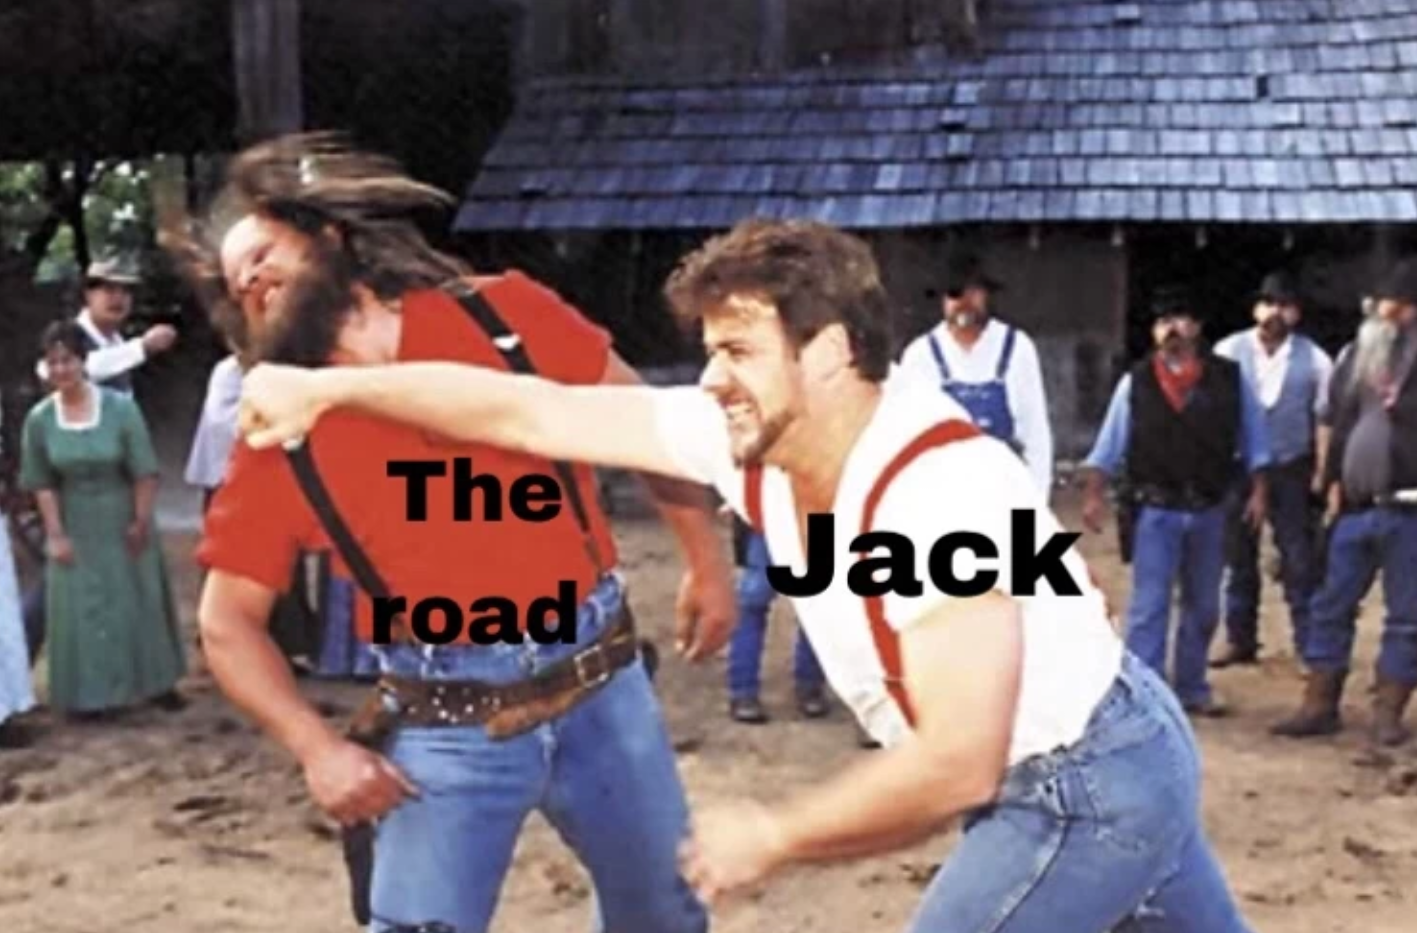 hit the road jack meme - The road ack